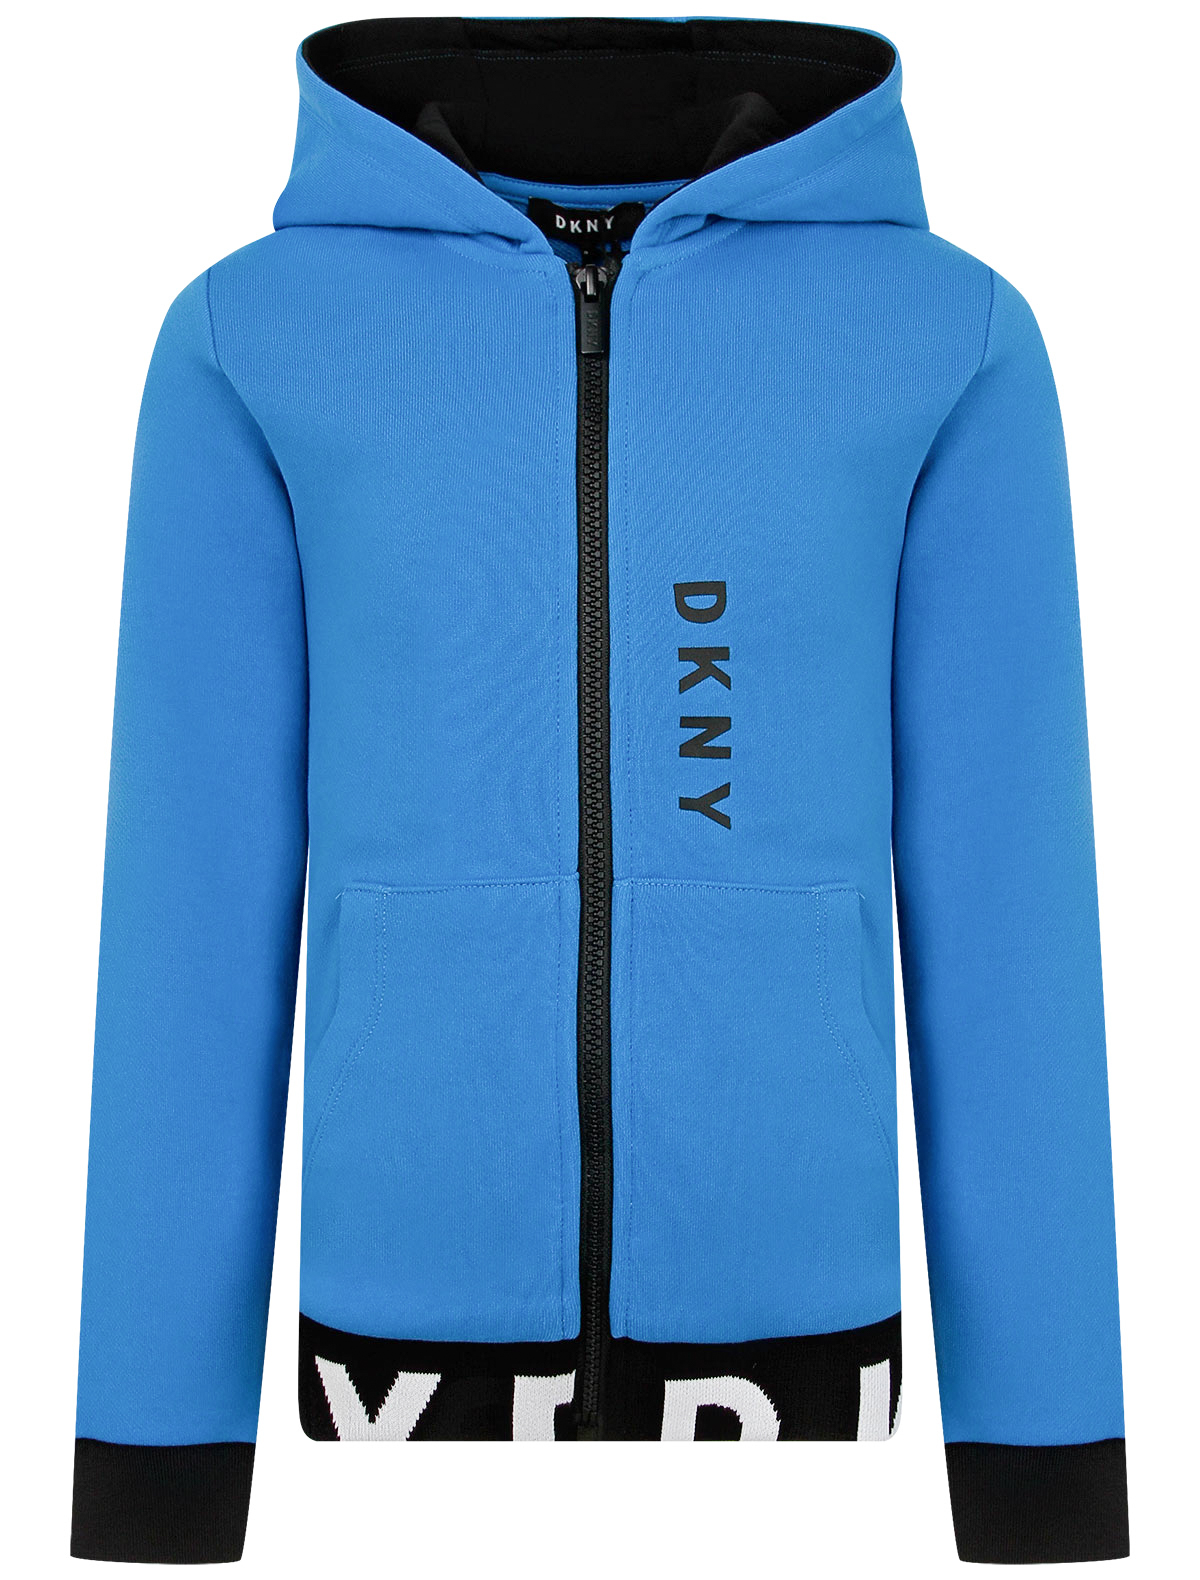 Толстовка DKNY синего цвета